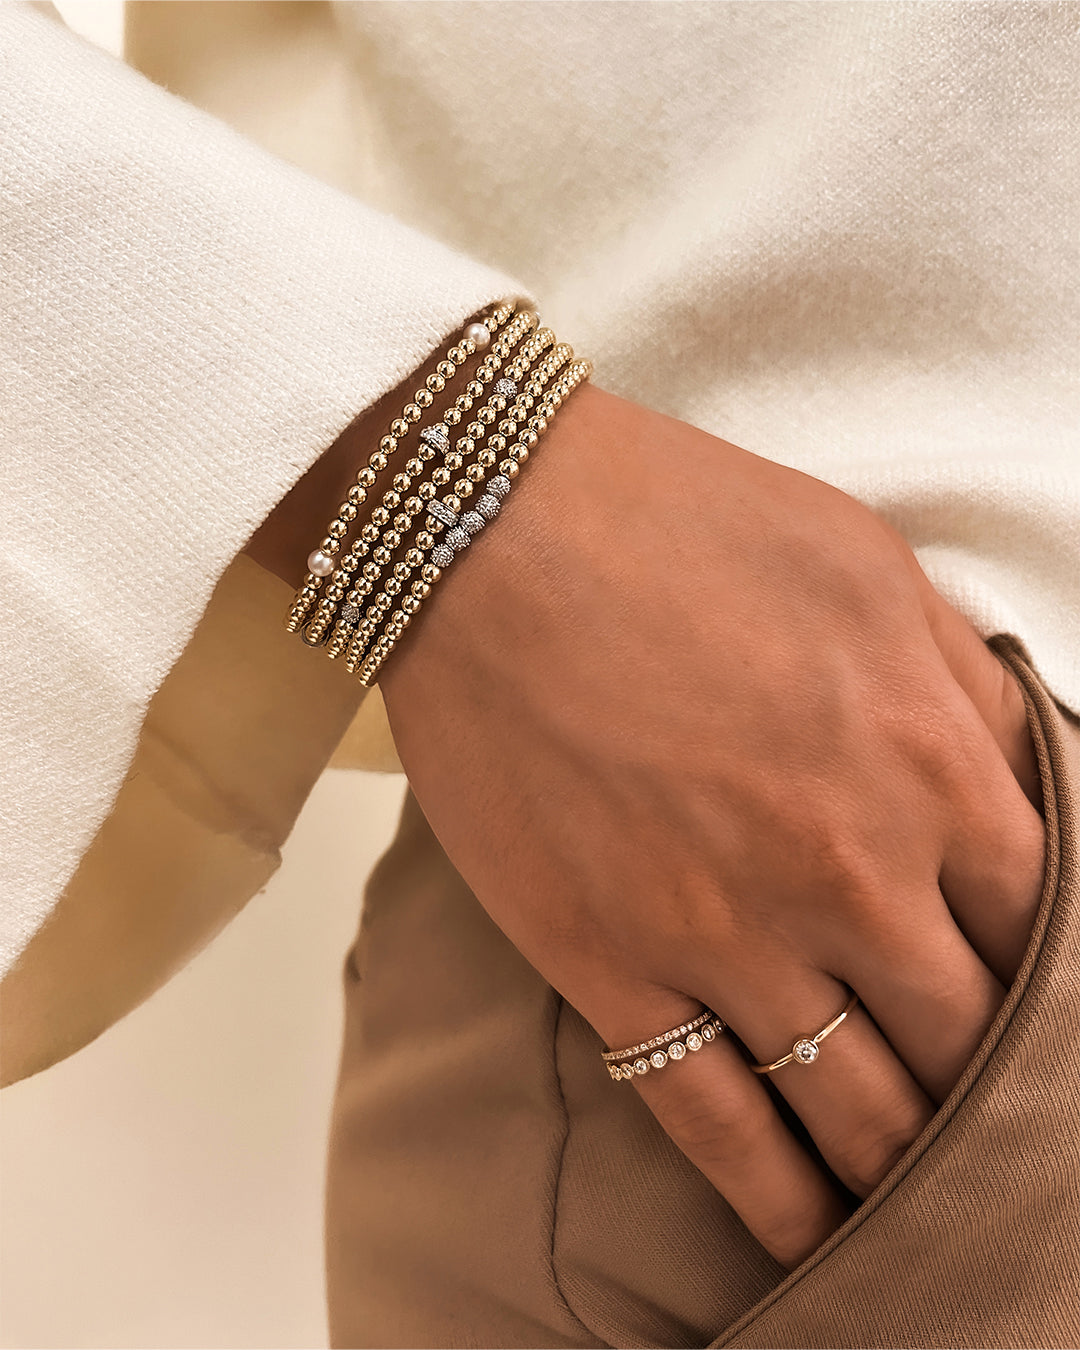 3mm Gold Segment Bead Bracelet with Diamond Bars